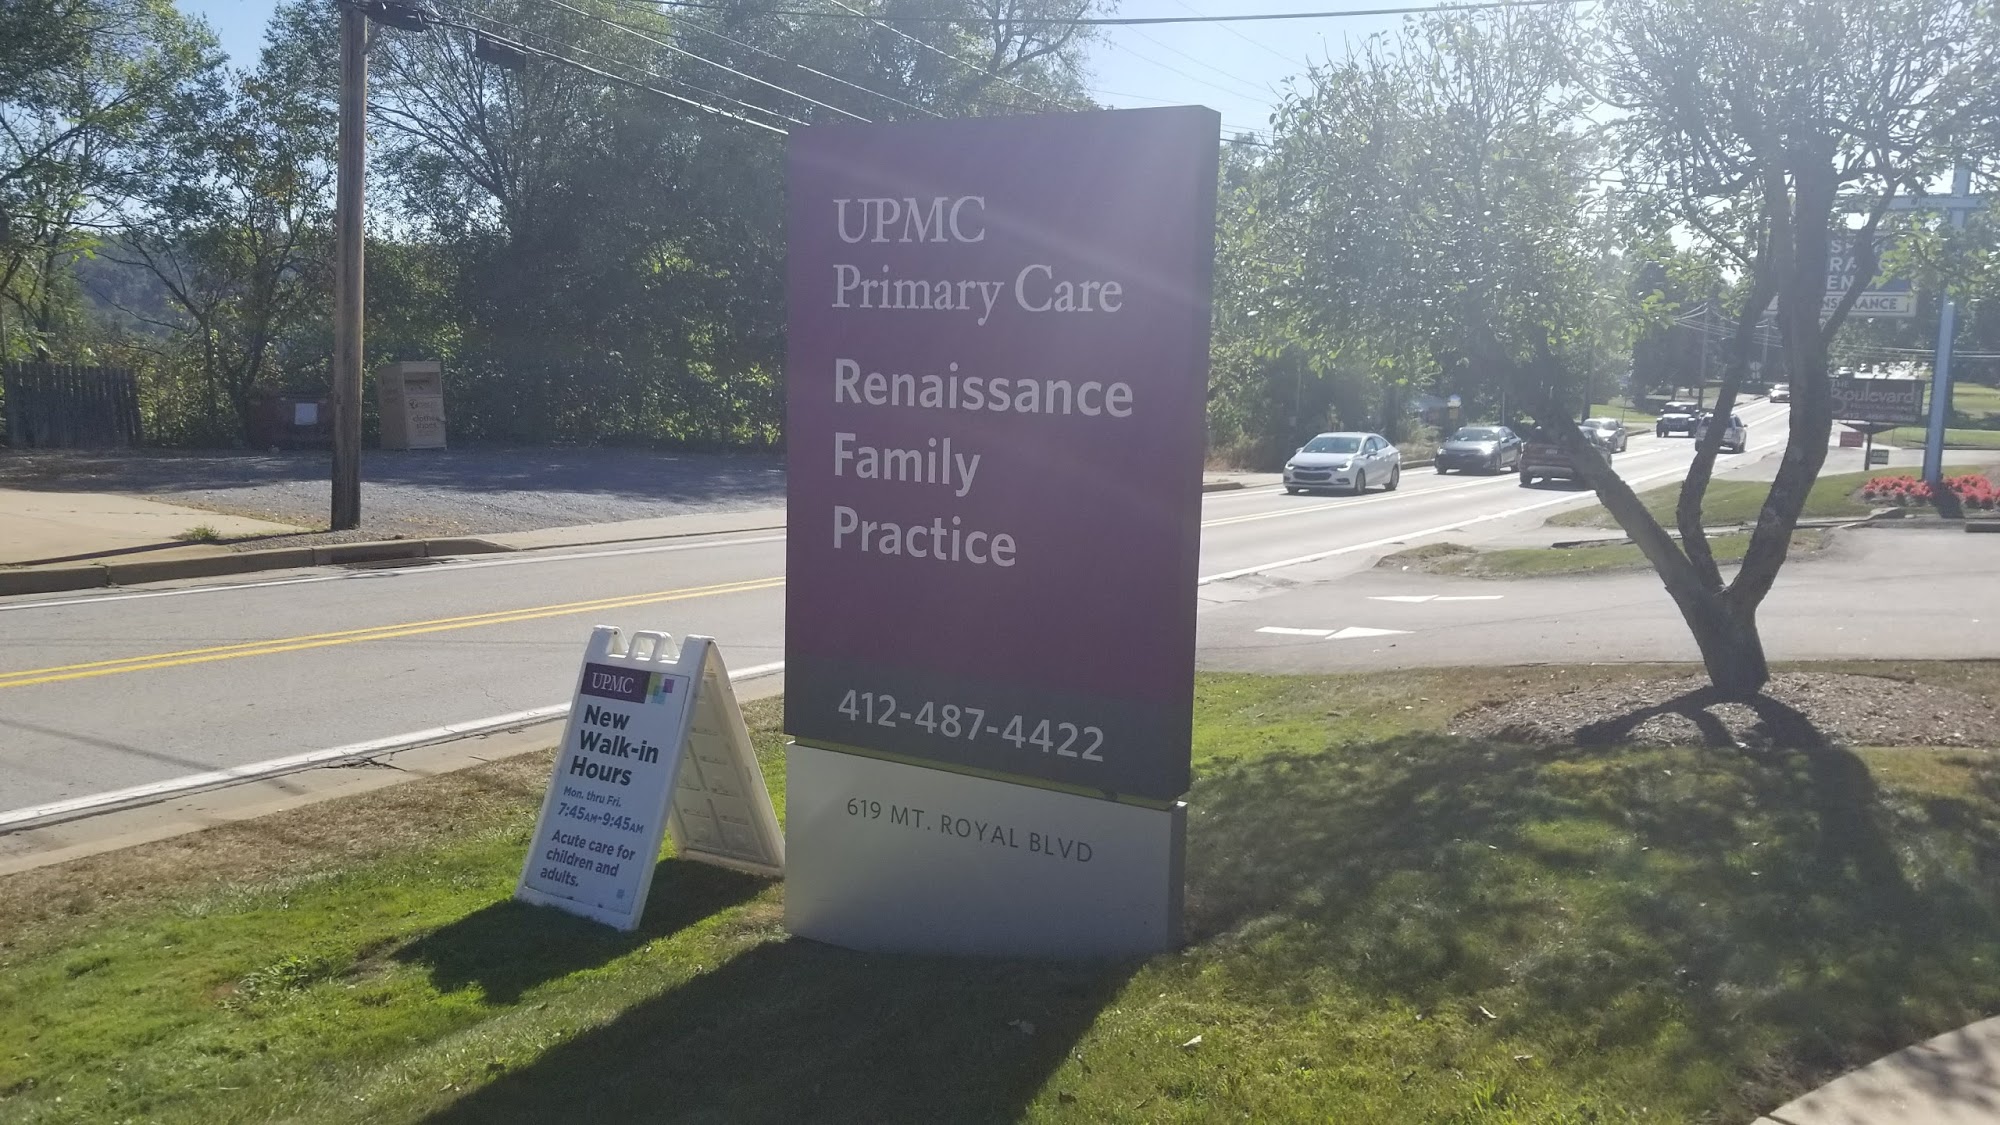 Renaissance Family Practice-UPMC